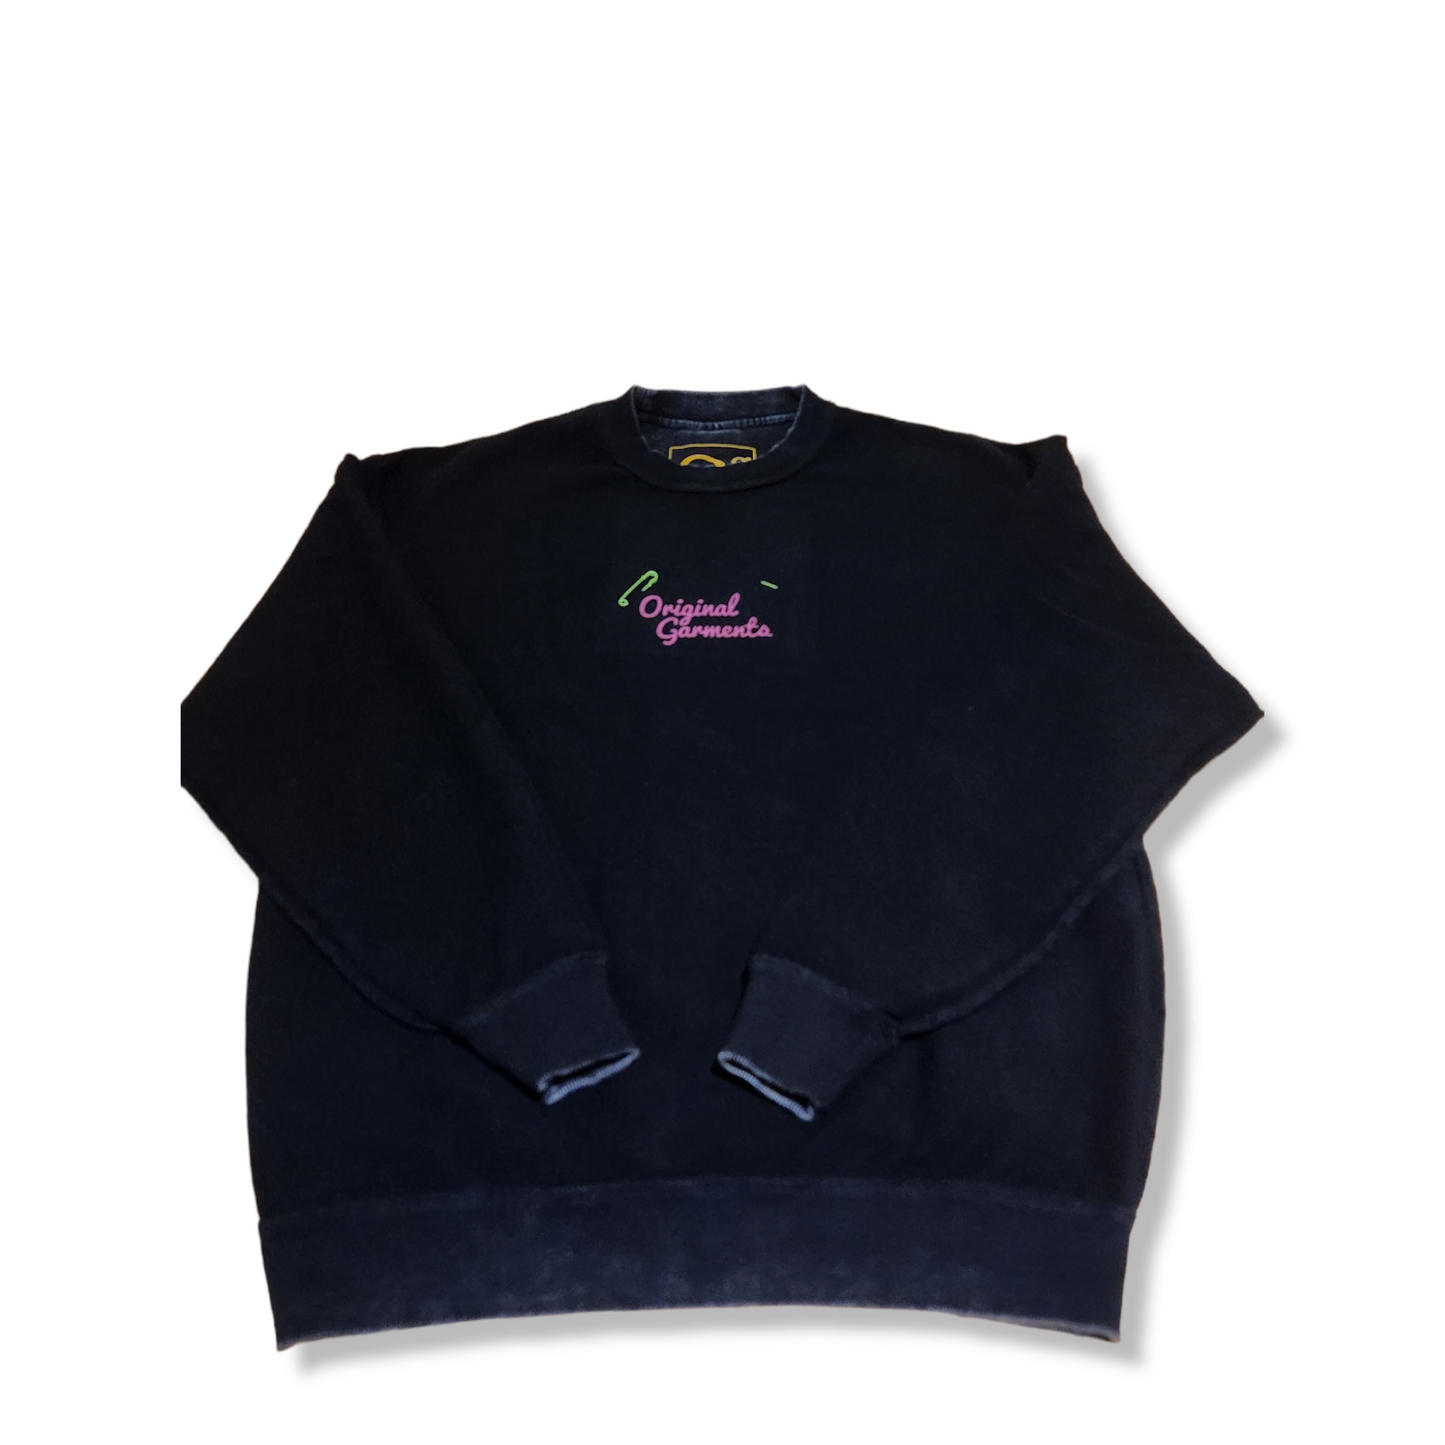 oG Signature Reversible Sweatshirt Black